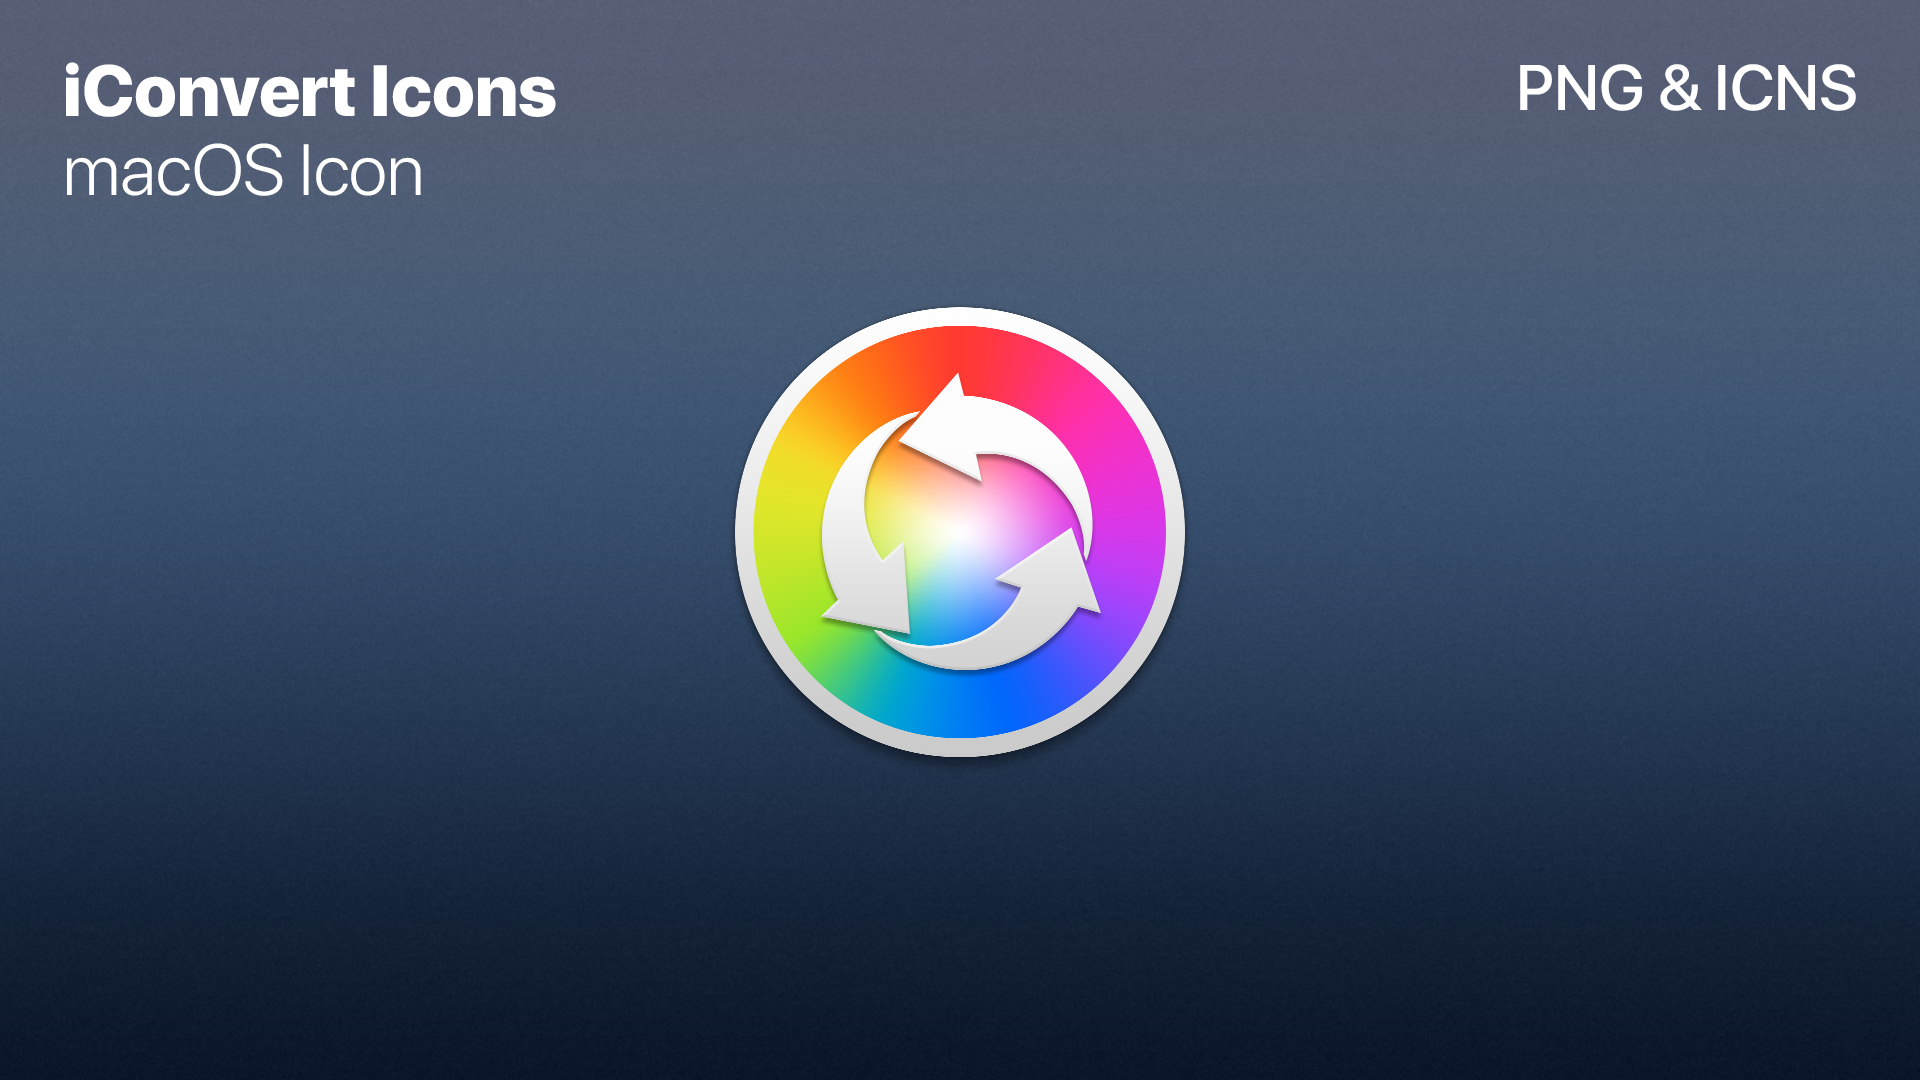 iconvert icons free download mac